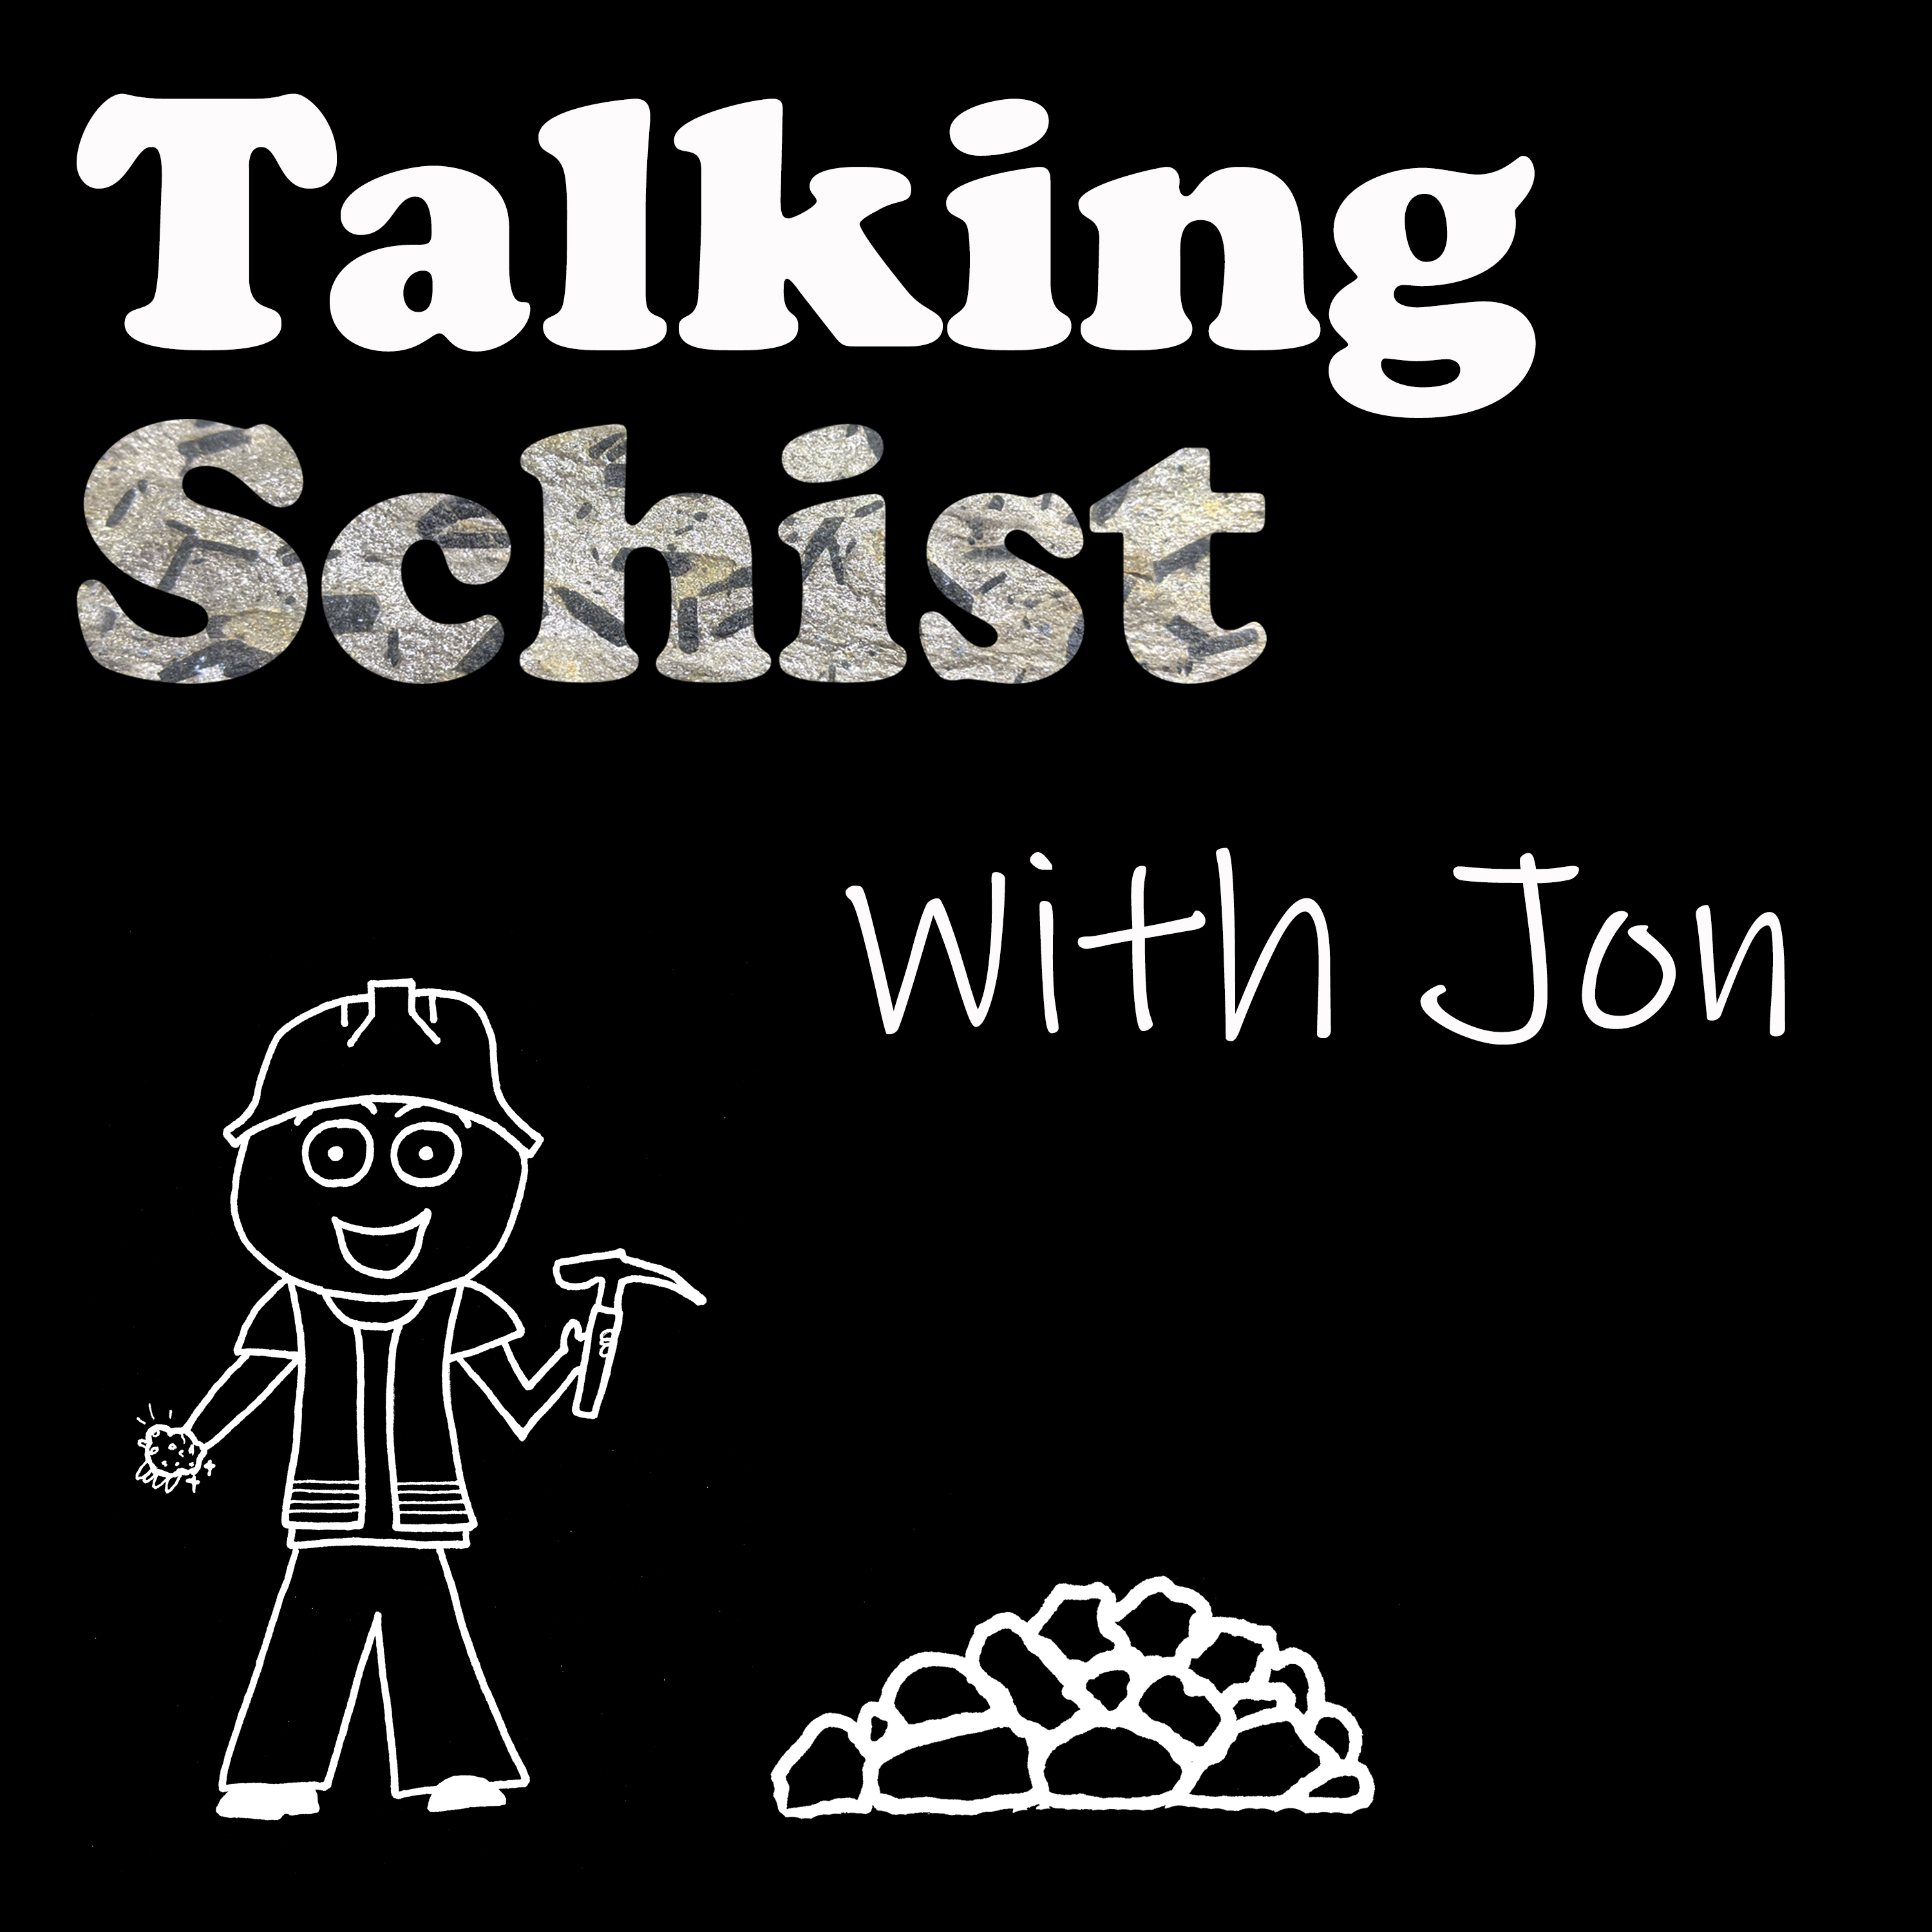 Talking Schist with Jon Podcast artwork